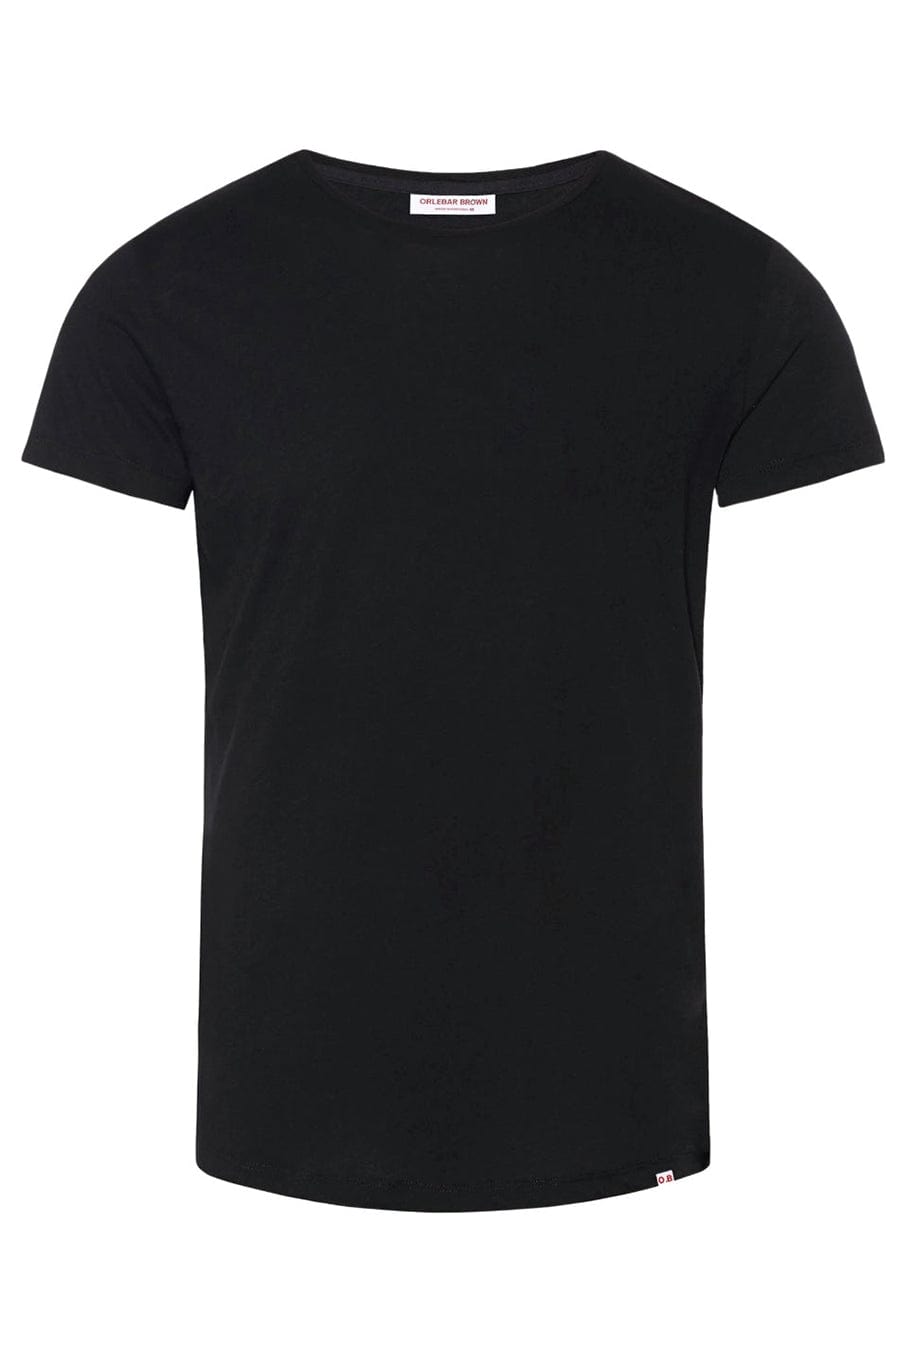 Black Tailored Fit Crew Neck OB T-Shirt MENSCLOTHINGSHIRT ORLEBAR BROWN   